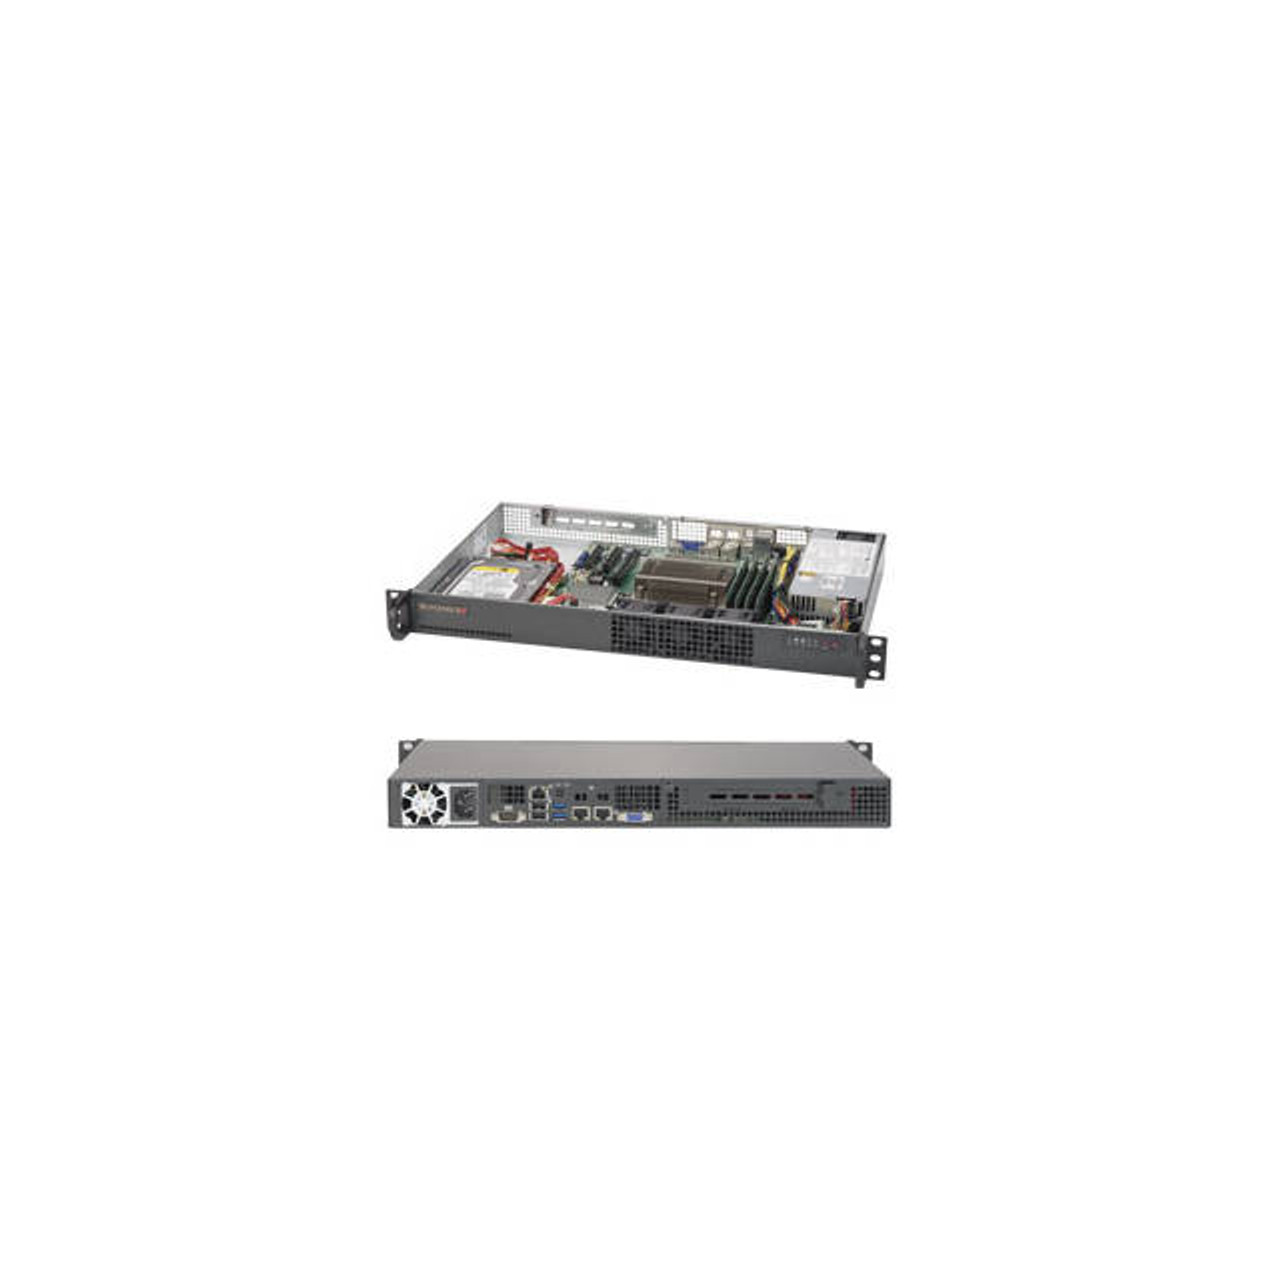 Supermicro SuperServer SYS-5019S-L LGA1151 200W 1U Rackmount Server Barebone System (Black)